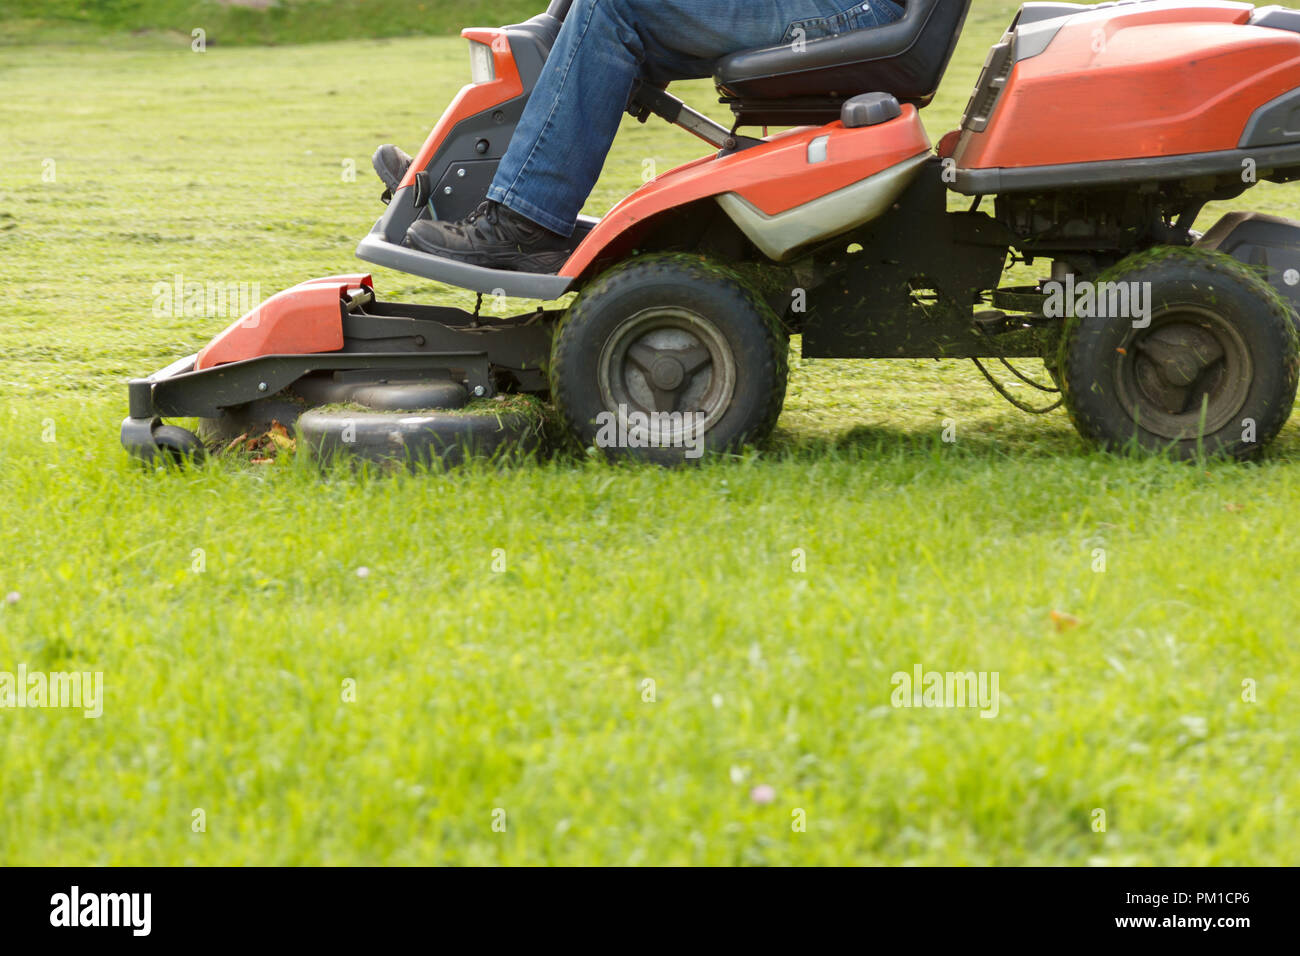 Rasenmäher Traktor im Stadtpark arbeiten Stockfotografie - Alamy